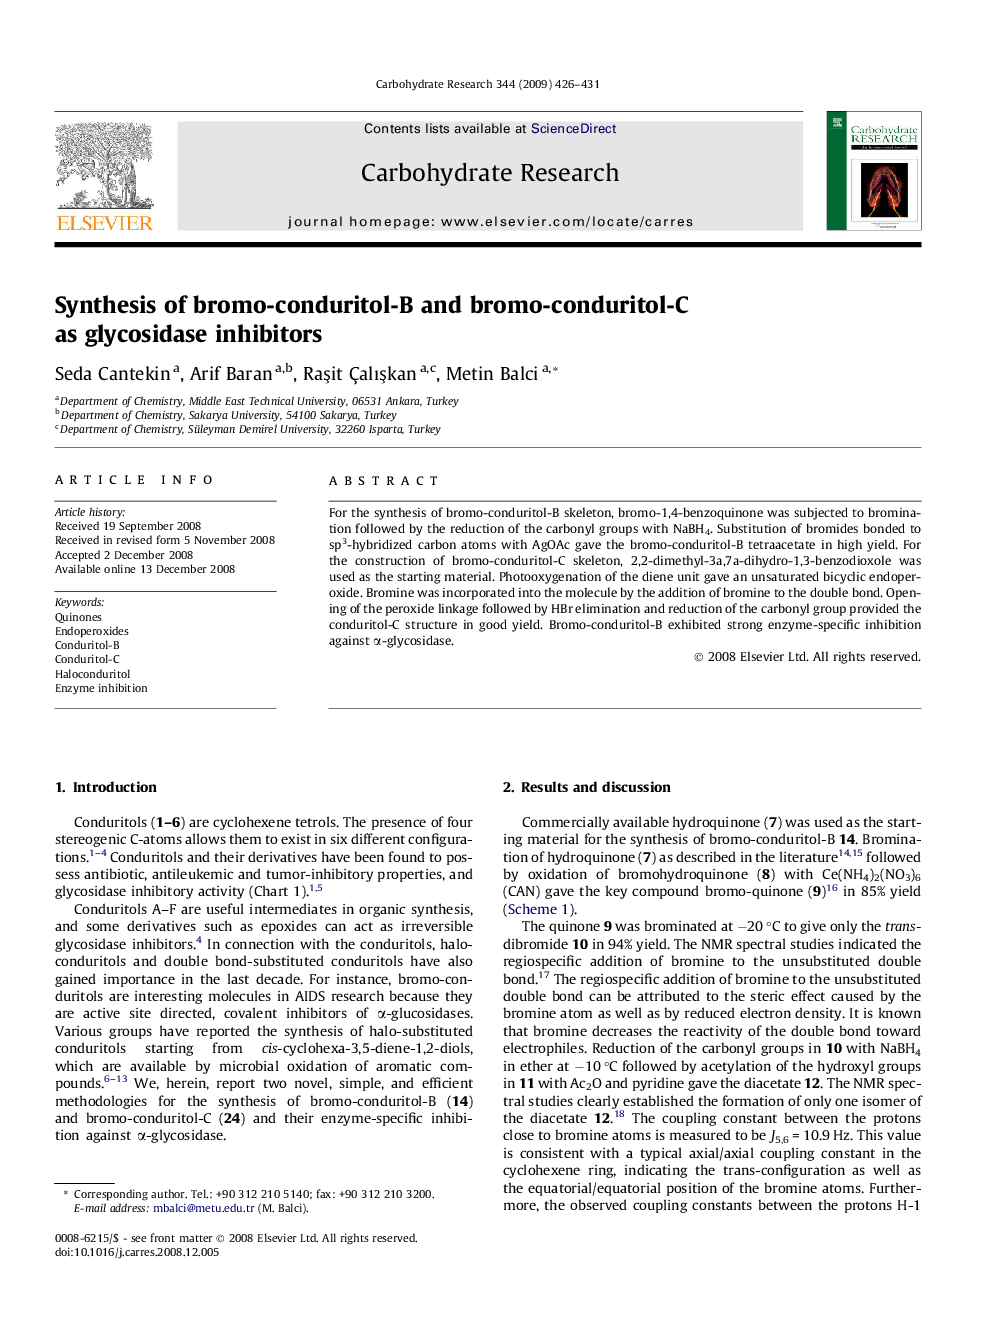 Synthesis of bromo-conduritol-B and bromo-conduritol-C as glycosidase inhibitors